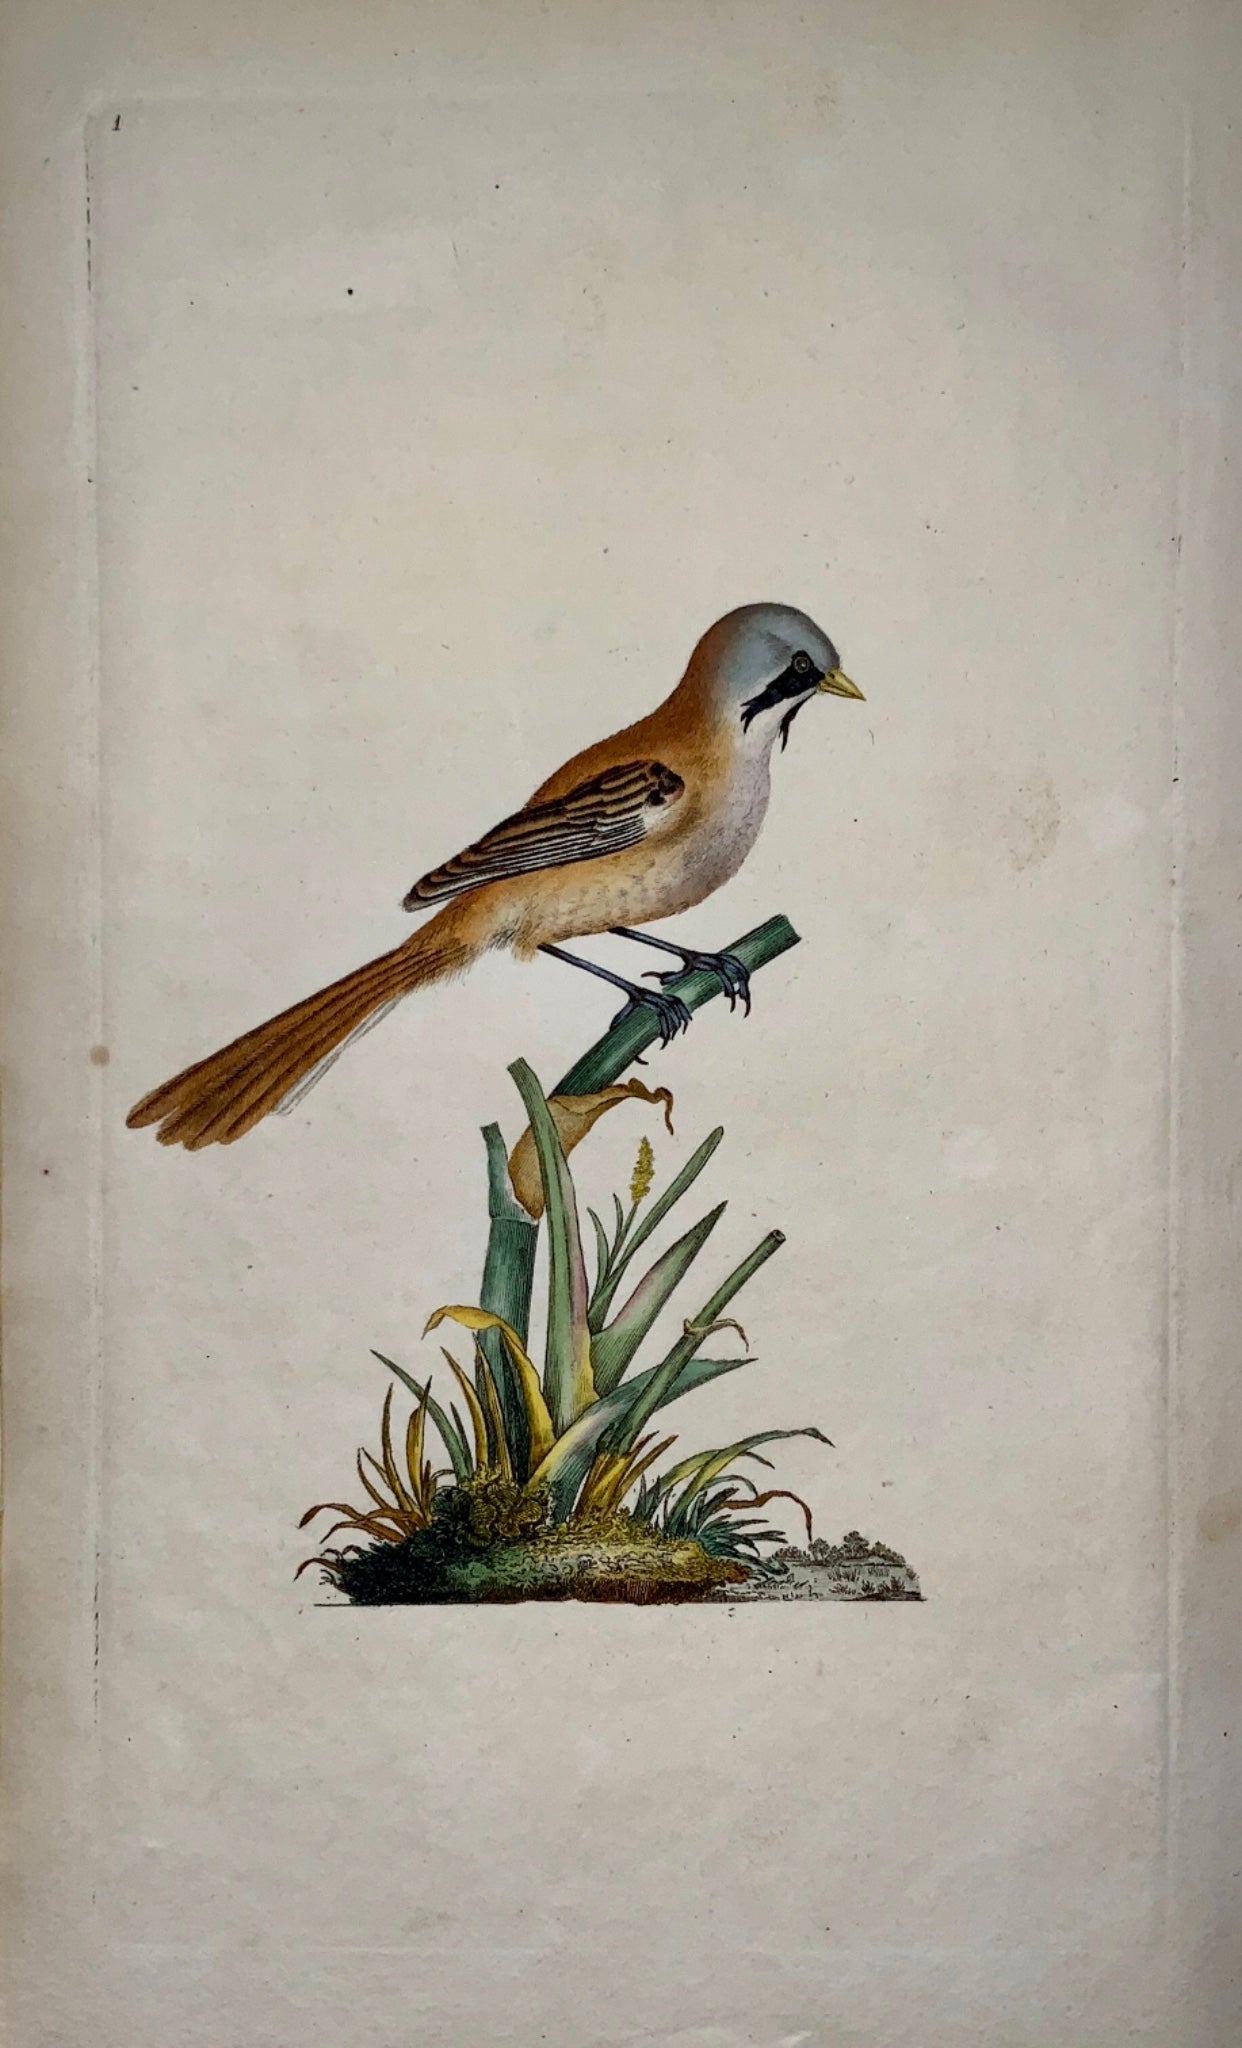 1794 Edward Donovan - TITMOUSE Ornithology - fine hand coloured copper engraving